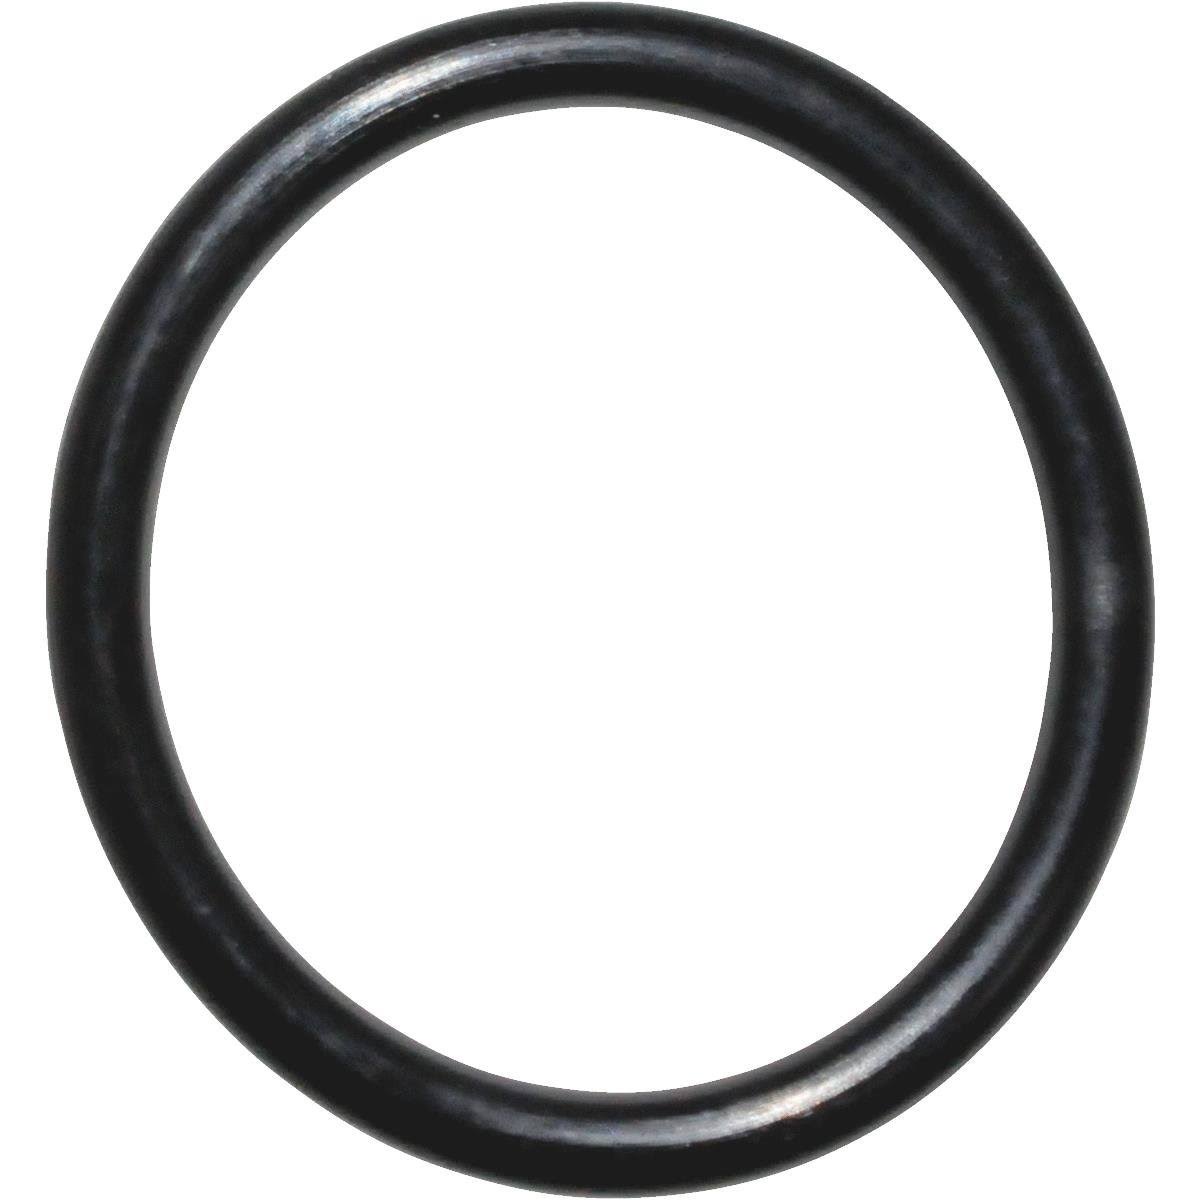 Danco O-Ring - Black, 0.75"x5/8"x1/16"